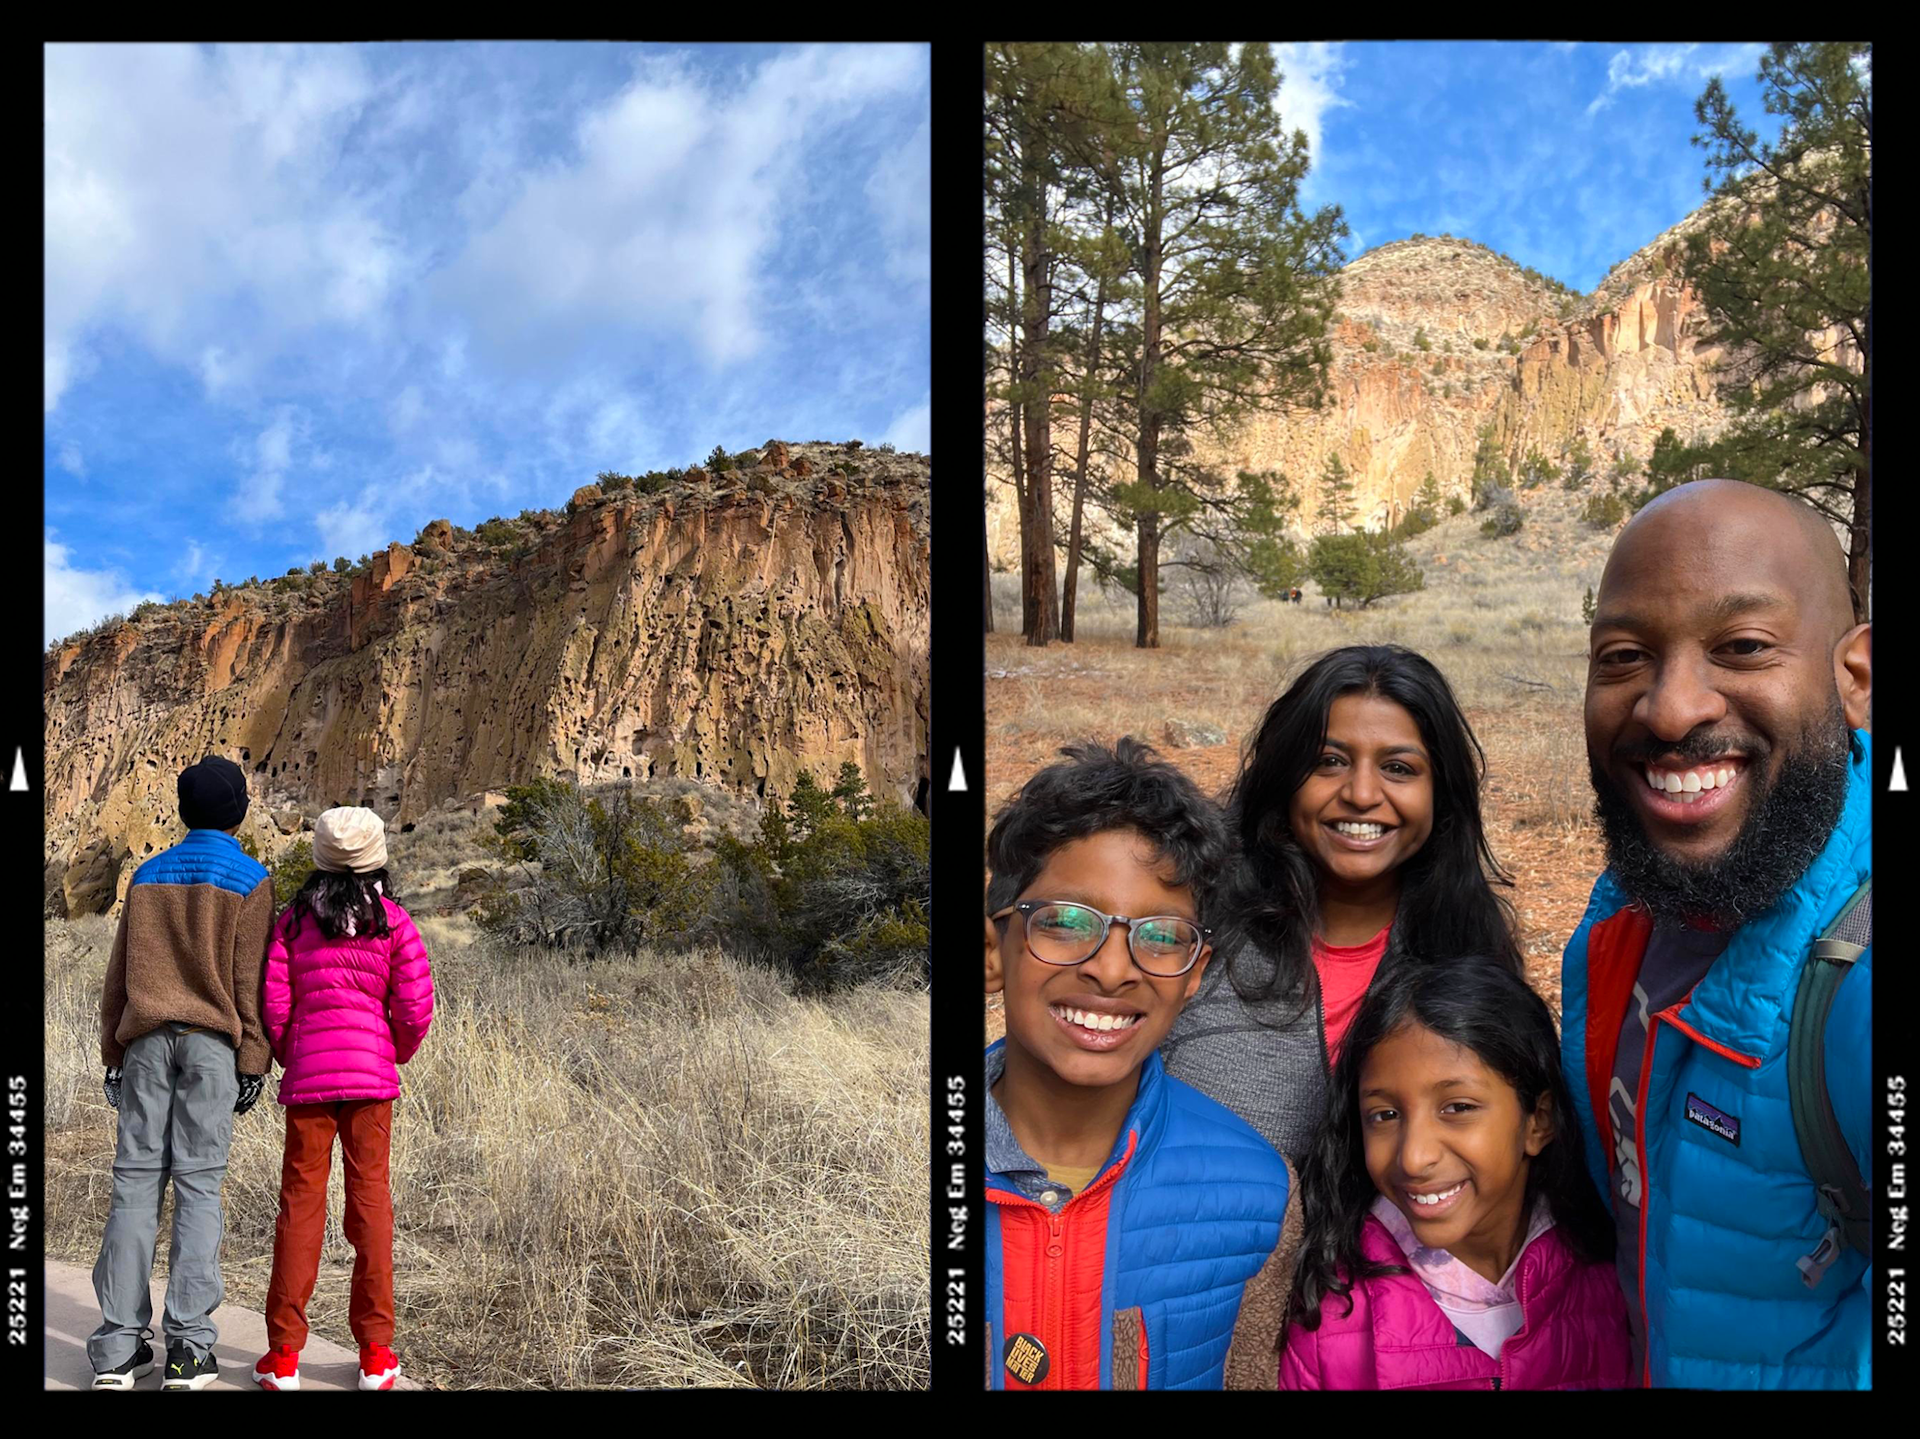 Nitya and family posing for photos in Santa Fe desert